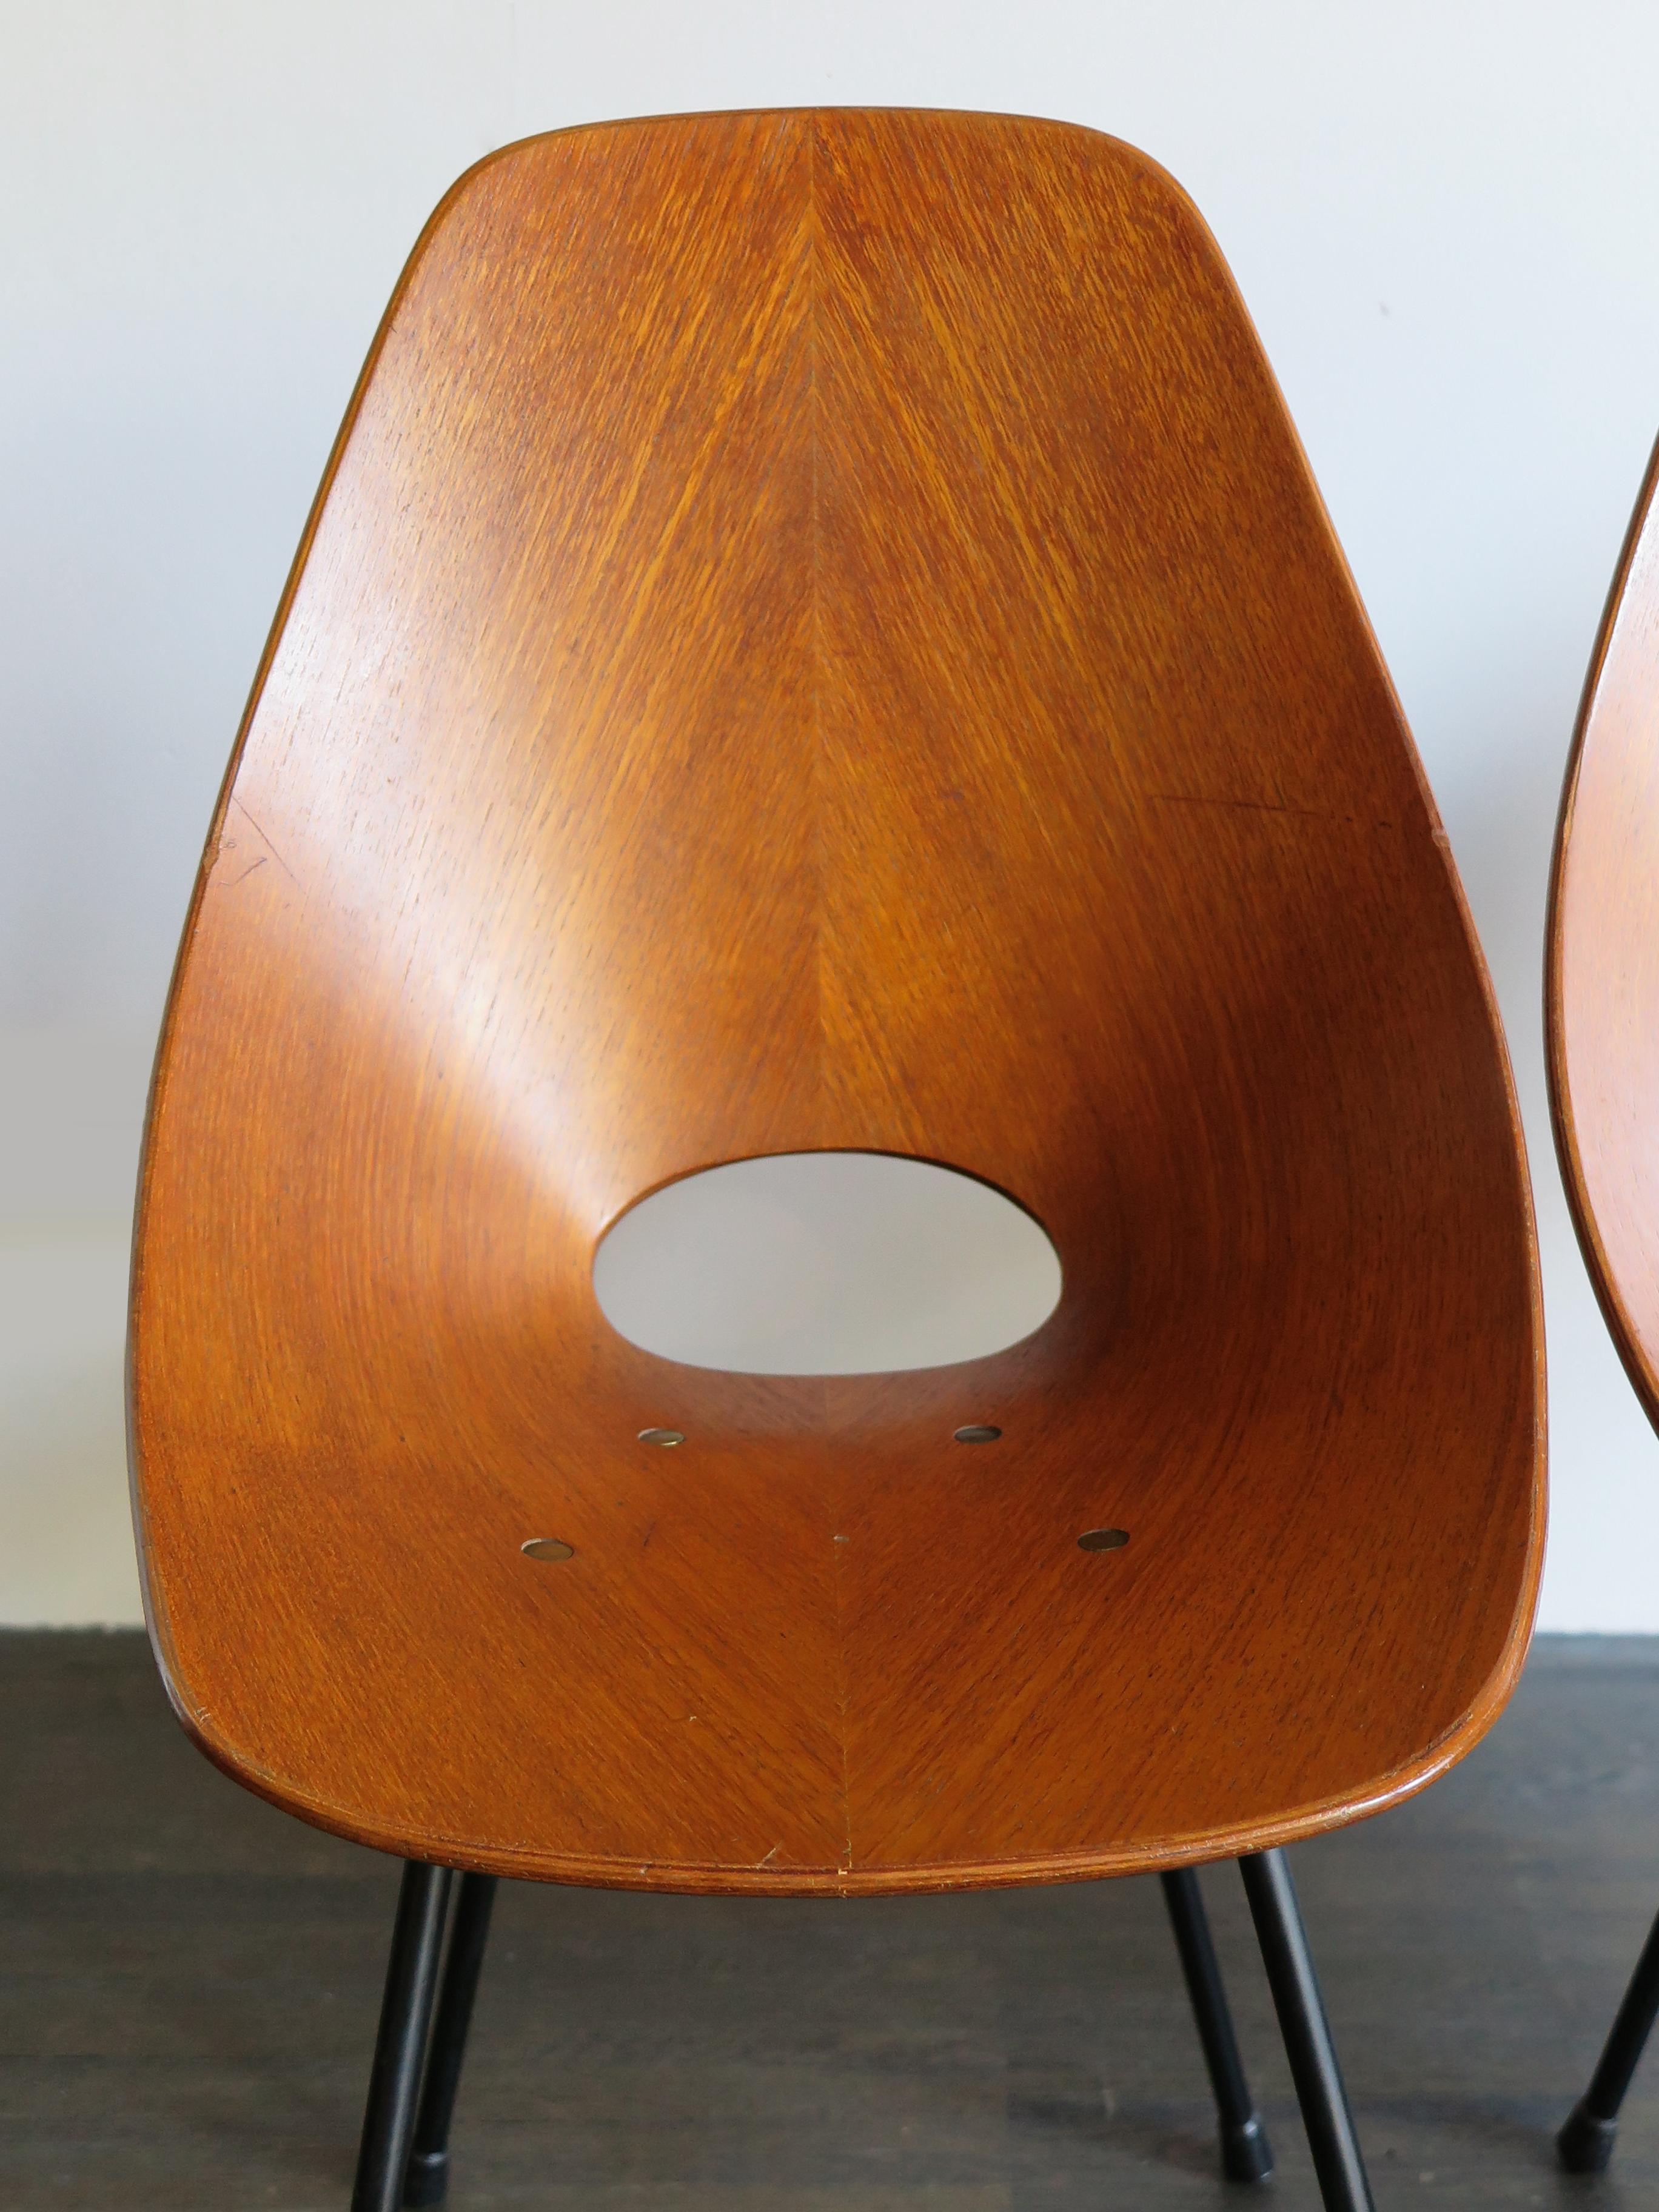 Mid-20th Century Vittorio Nobili Italian Wood Medea Chairs for Fratelli Tagliabue, 1950s For Sale